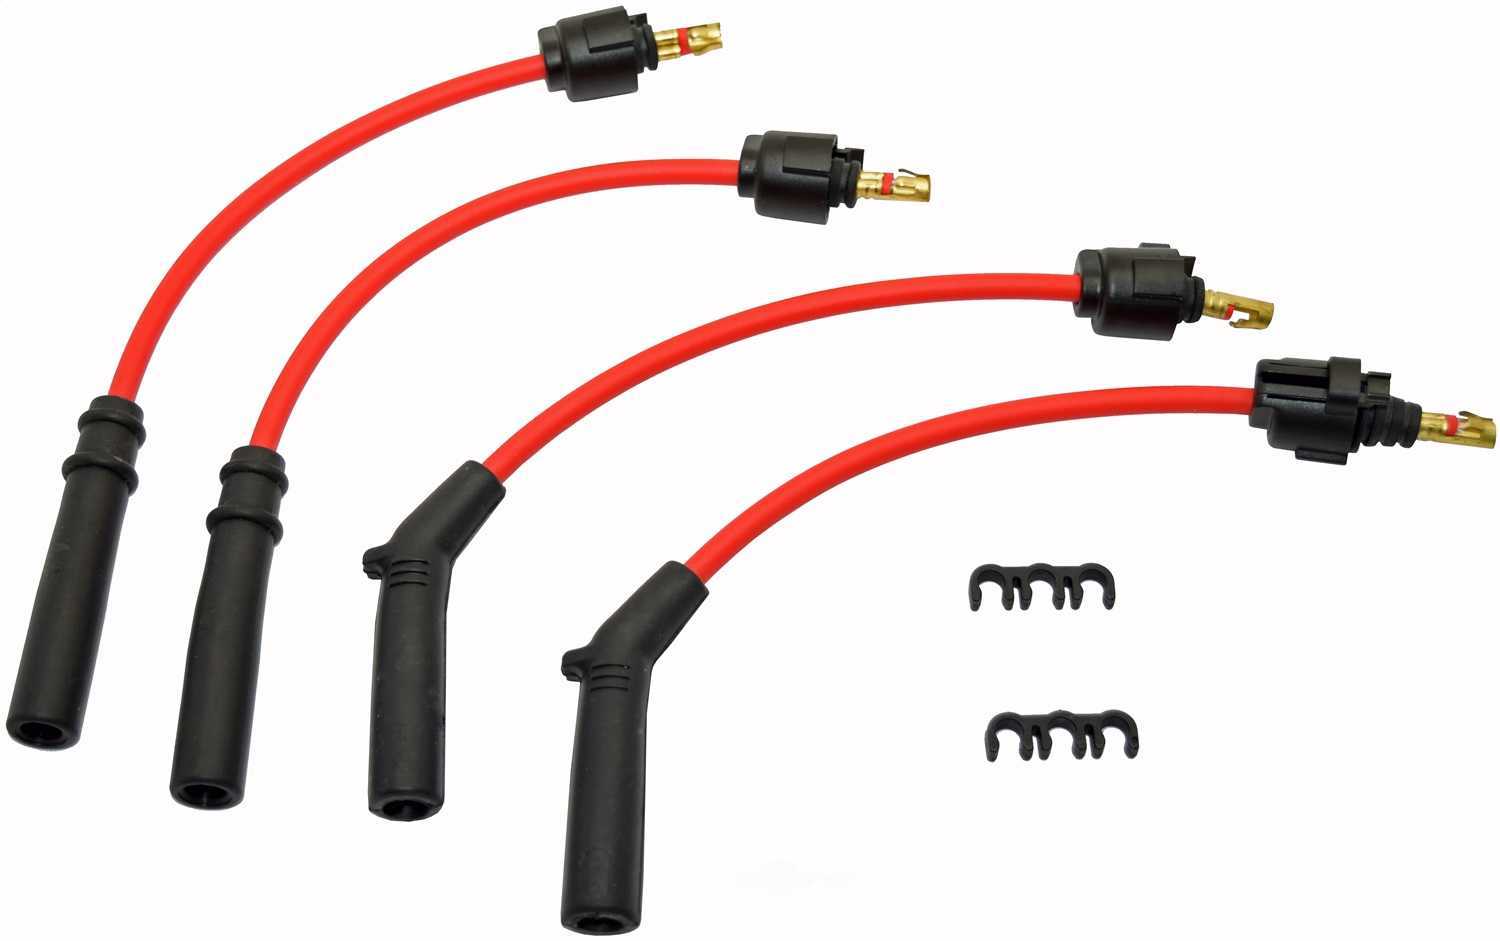 KARLYN/STI - Karlyn-STI Spark Plug Wire Set - KLY 274